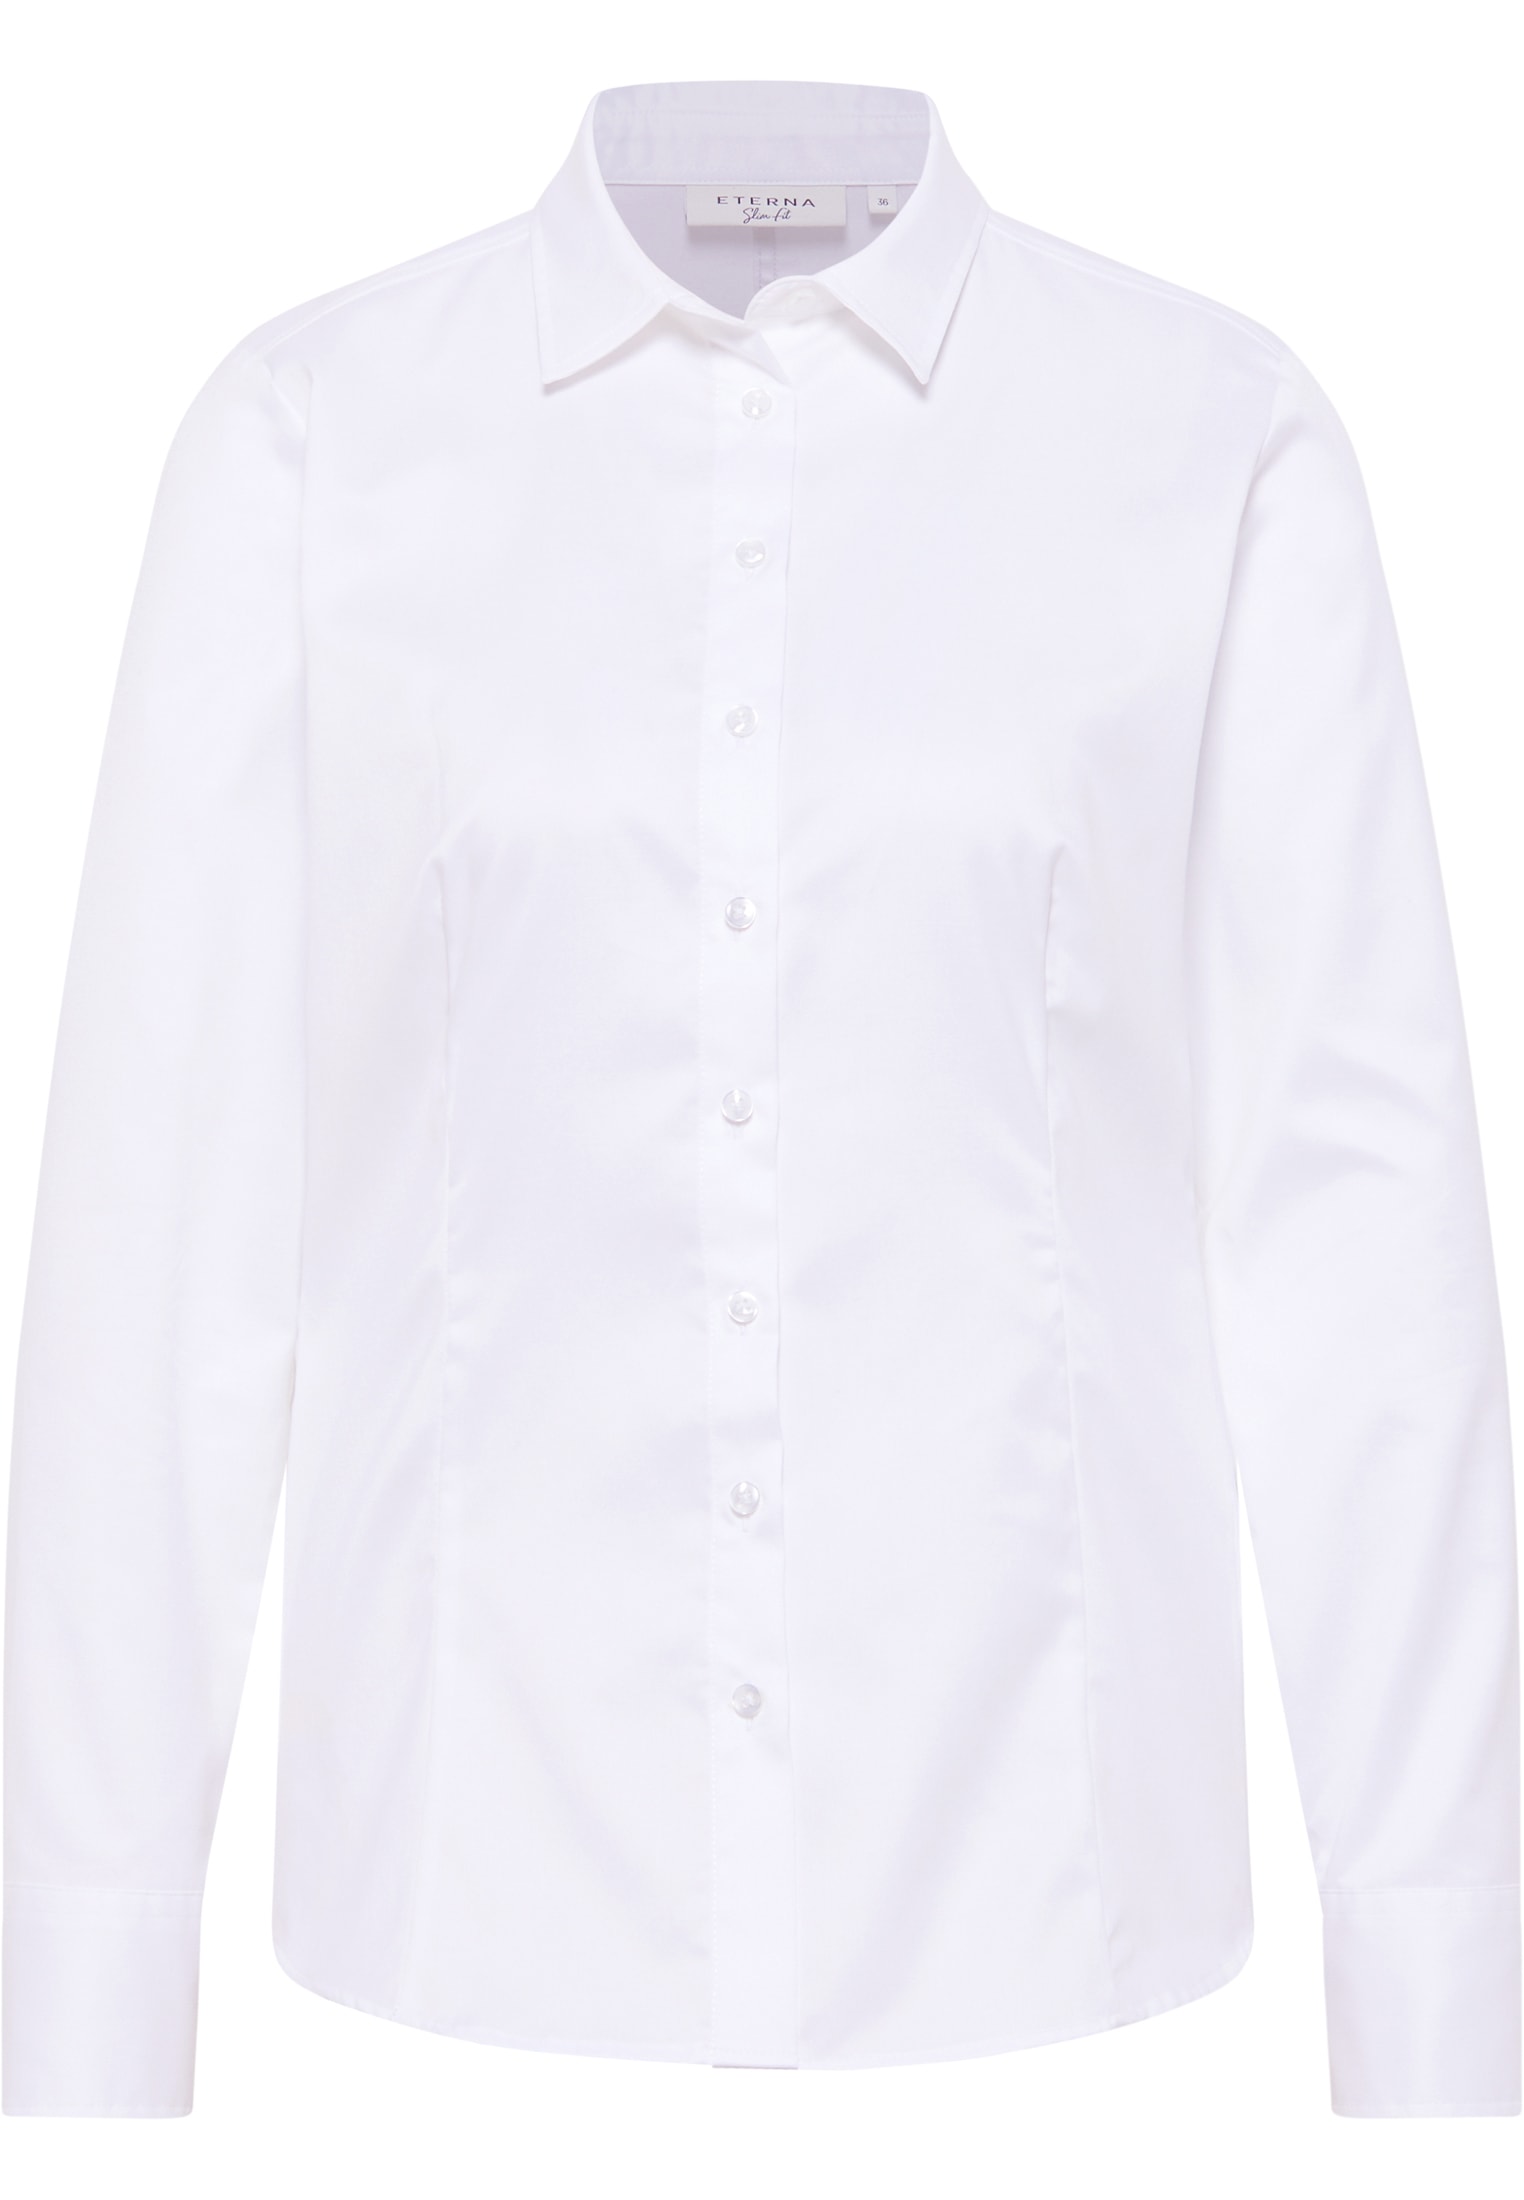 Cover Shirt Bluse 34 unifarben | weiß weiß | | 2BL00073-00-01-34-1/1 | Langarm in